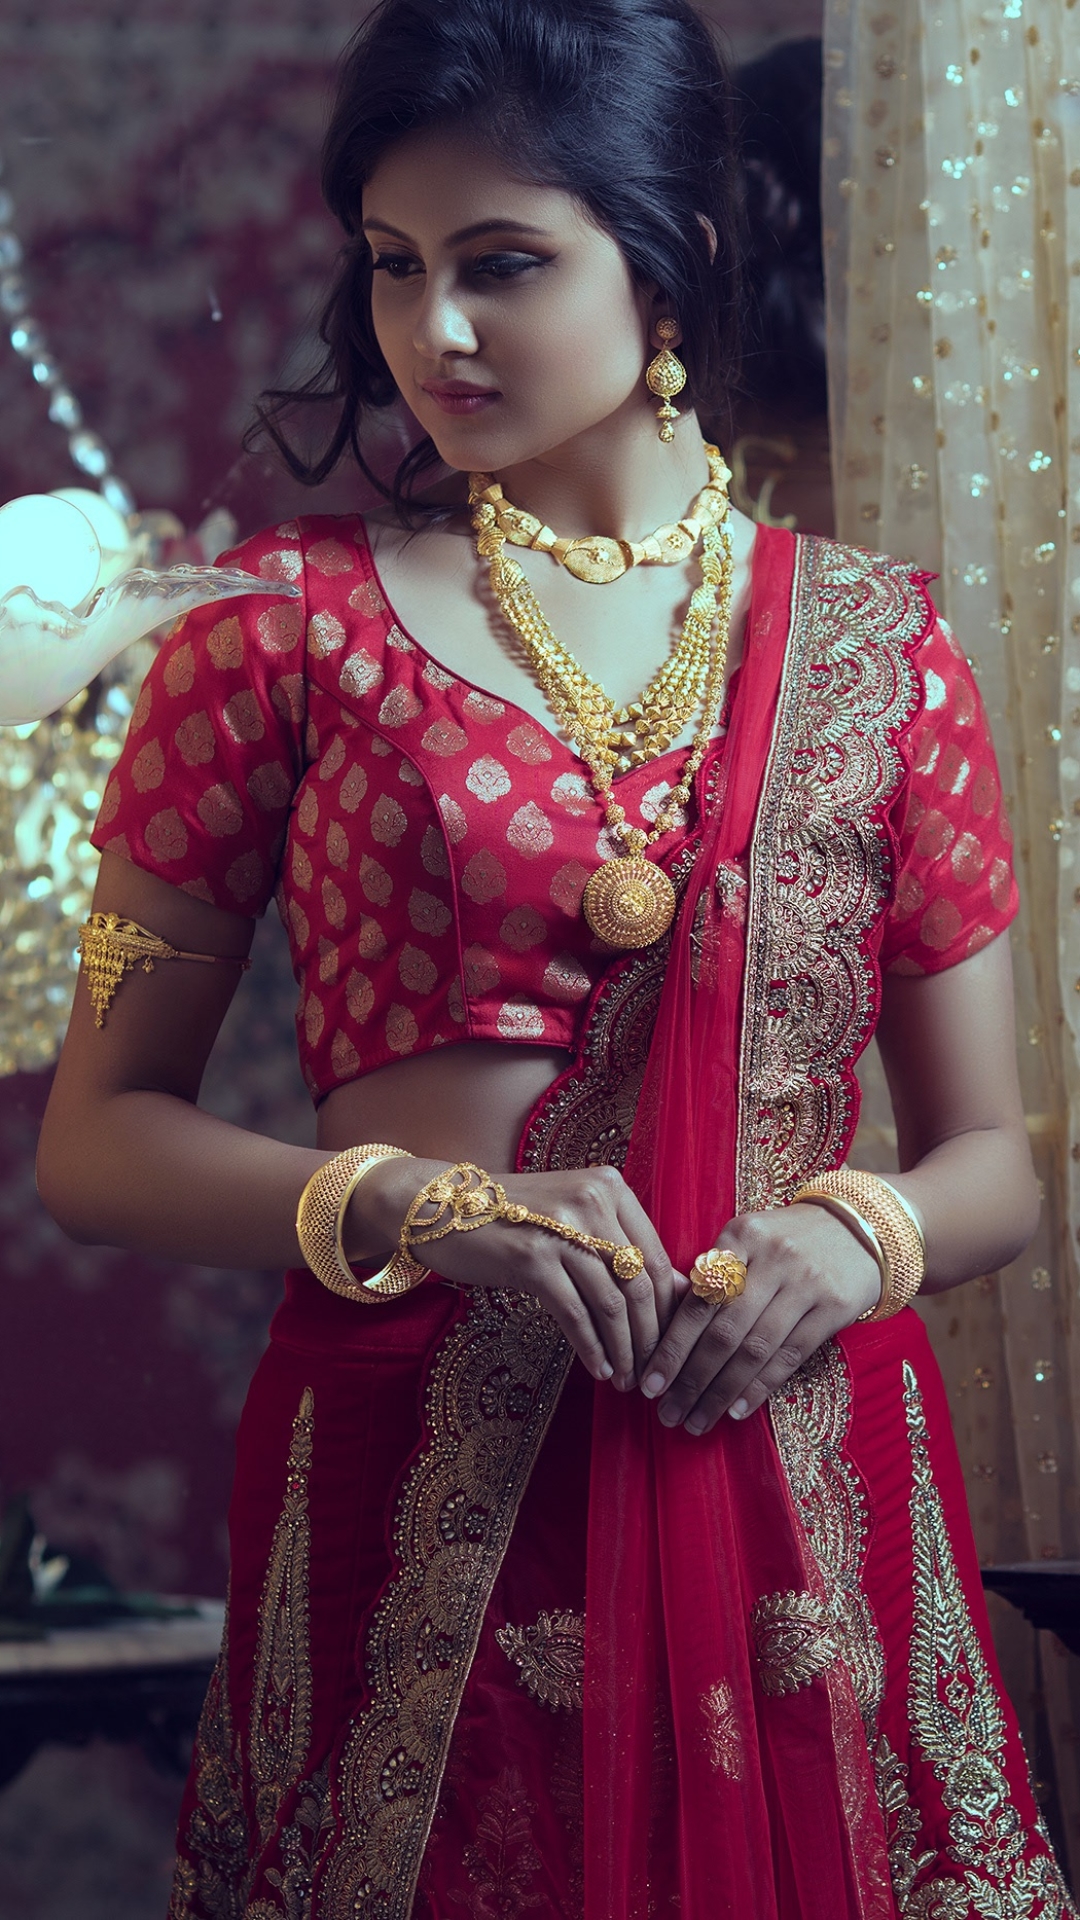 Descarga gratuita de fondo de pantalla para móvil de Joyas, Modelo, Mujeres, Indio, Disfraz Tradicional, Sari.